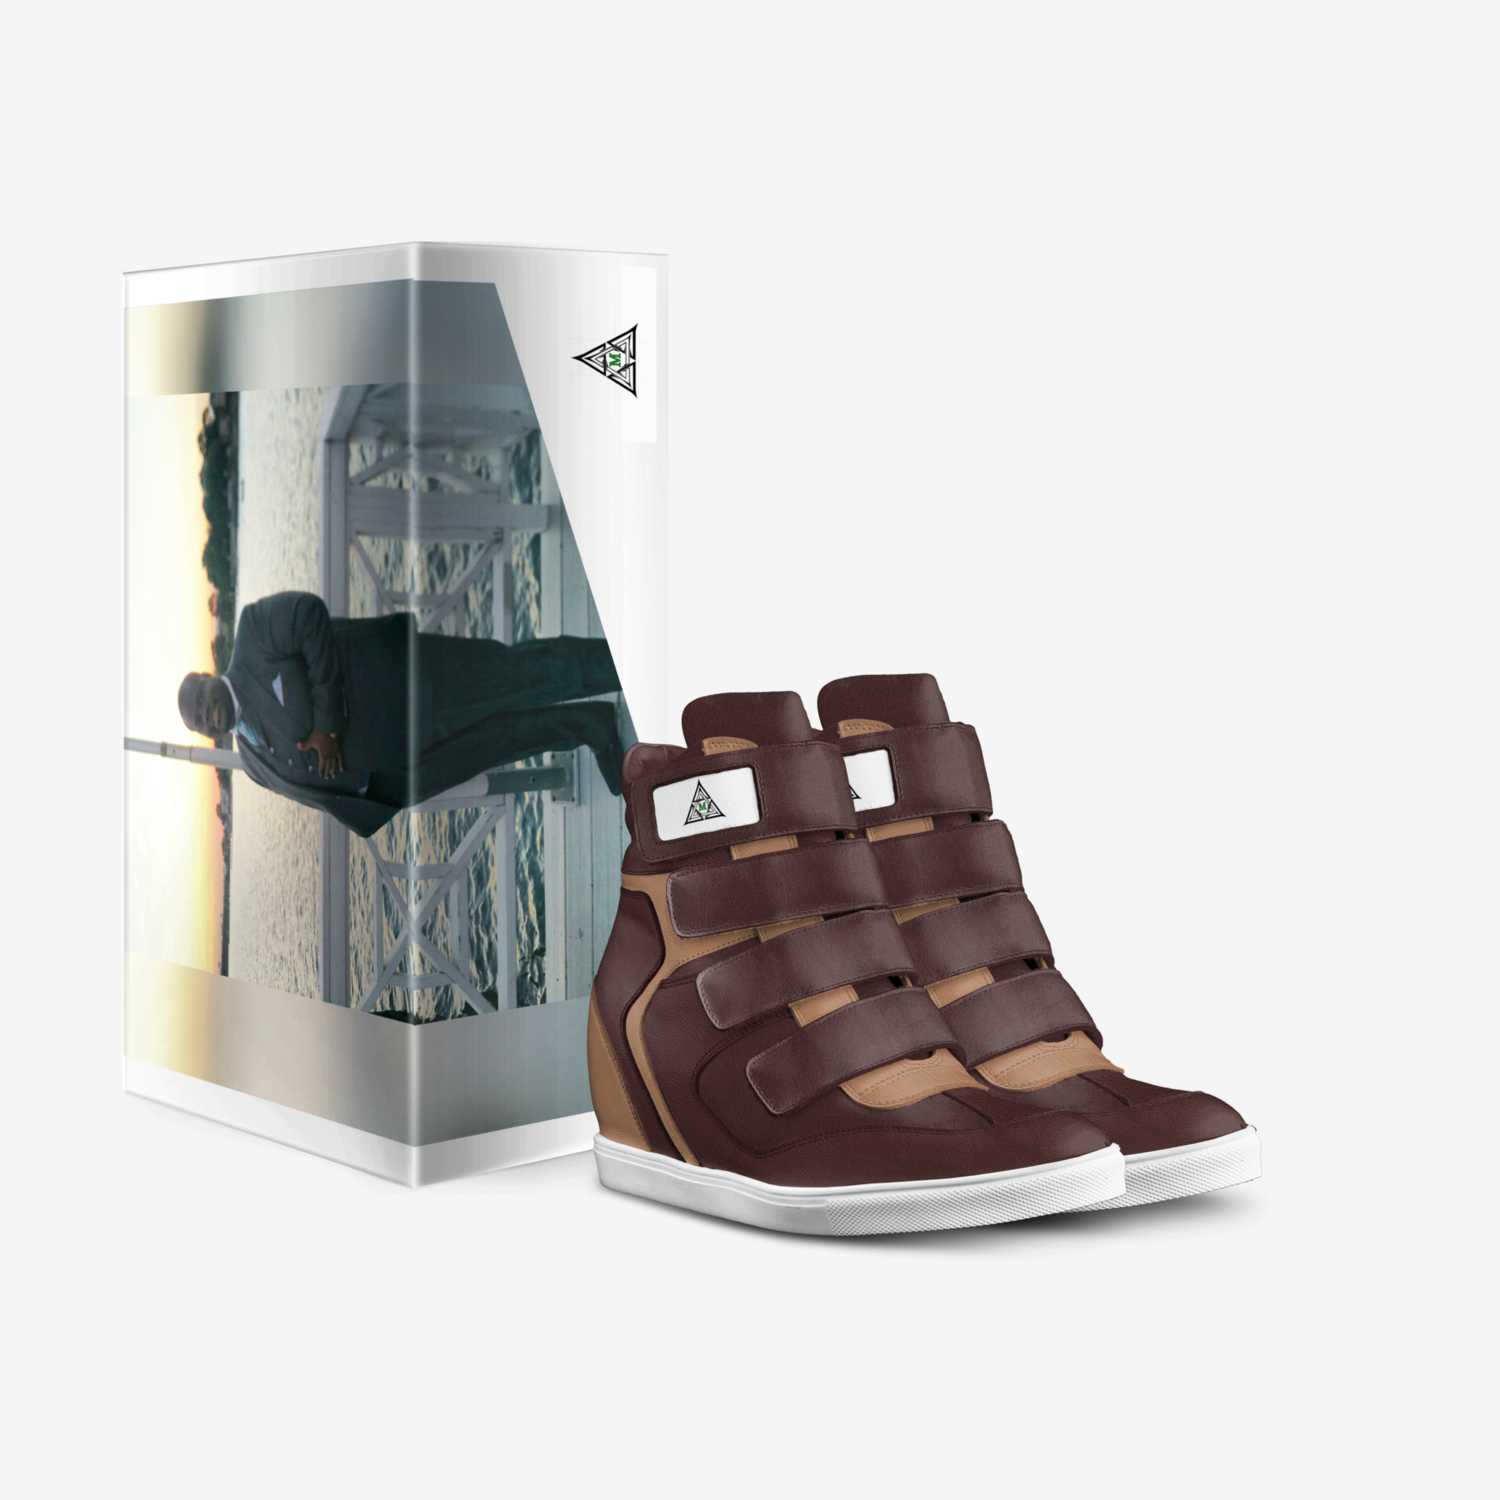 Murphnetti WW custom made in Italy shoes by Tyriek Murphy | Box view